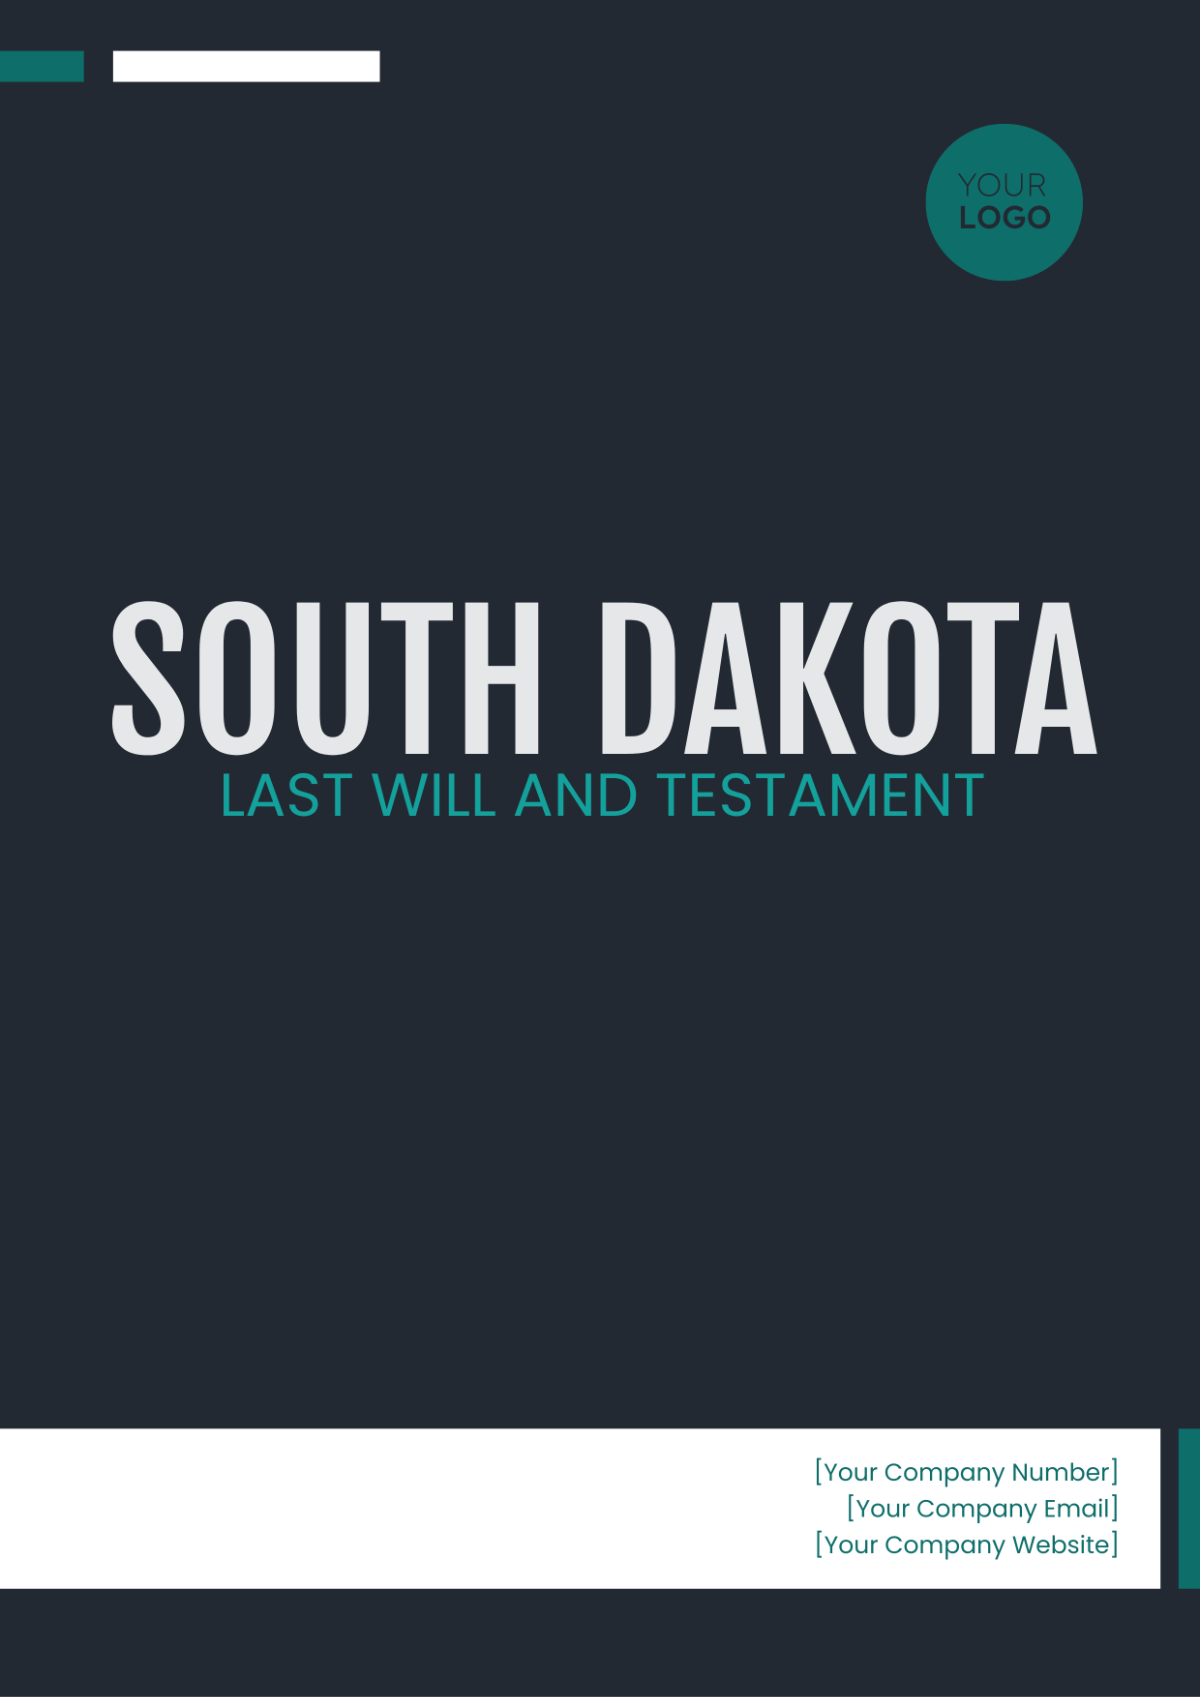 South Dakota Last Will and Testament Template